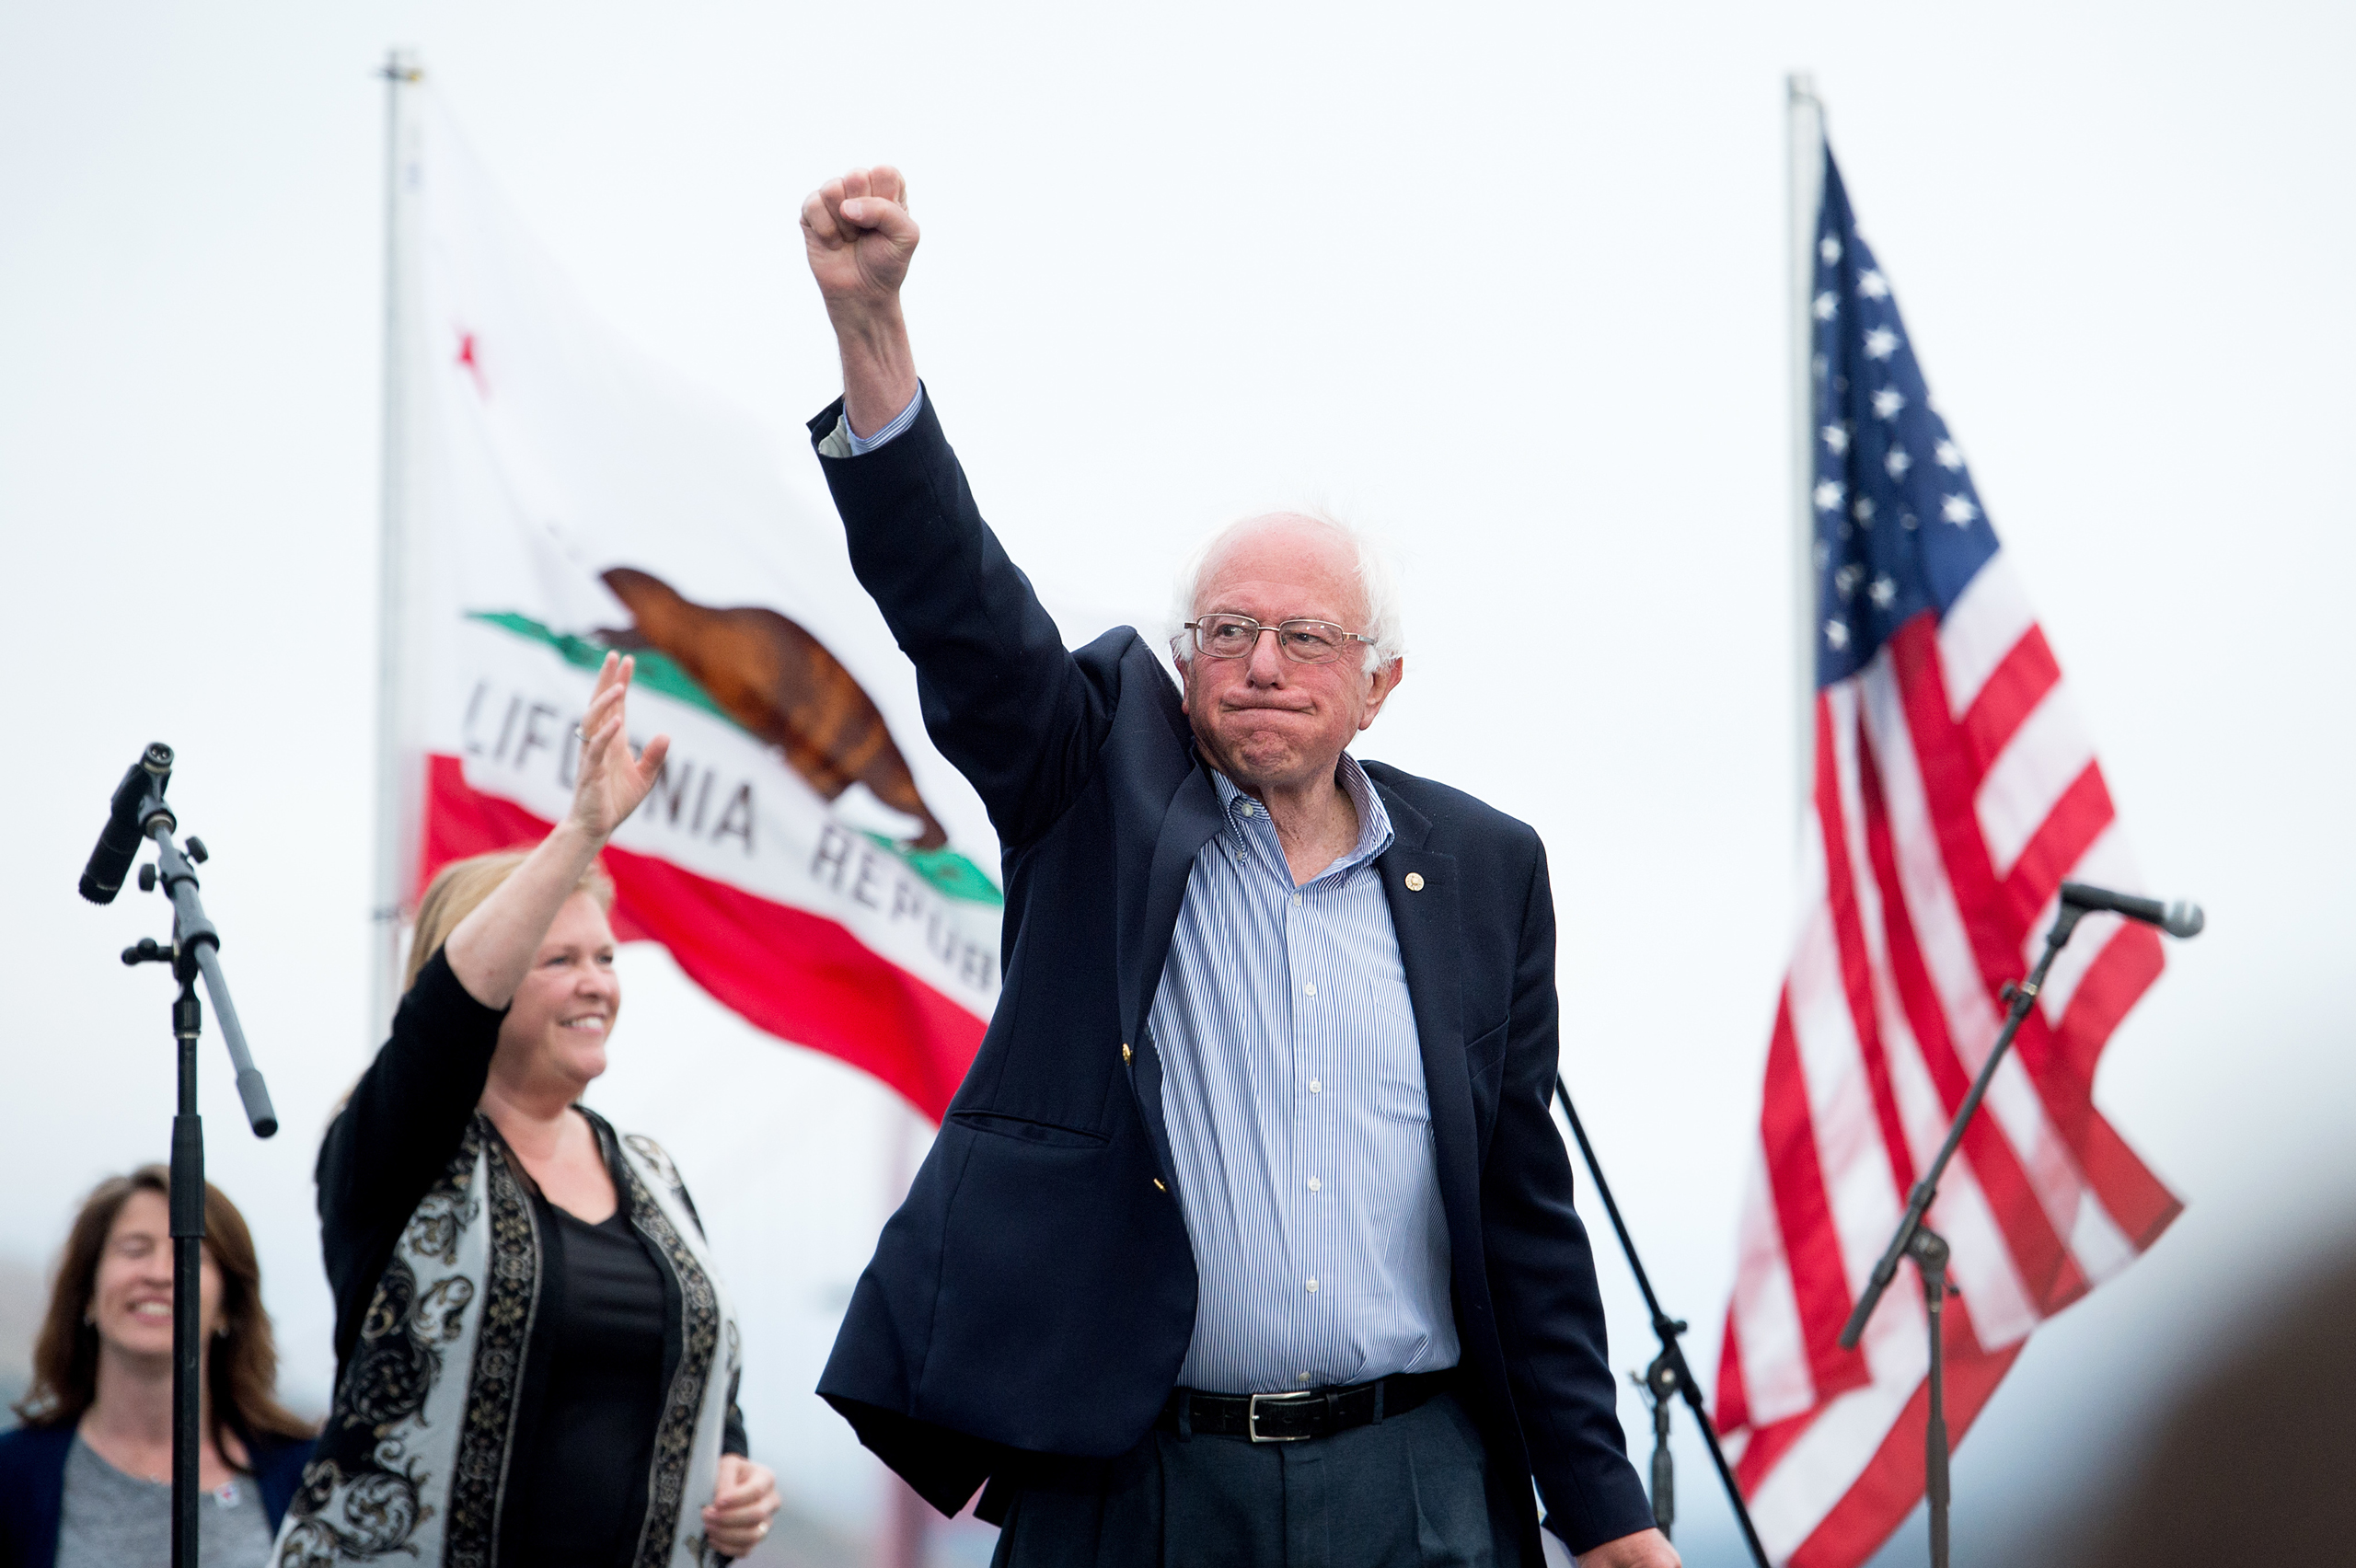 Democratic presidential candidate Sen. Bernie Sanders and his wife Jane Sanders arrive at a campaign rally in San Francisco on June 6, 2016. (Noah Berger—AP)